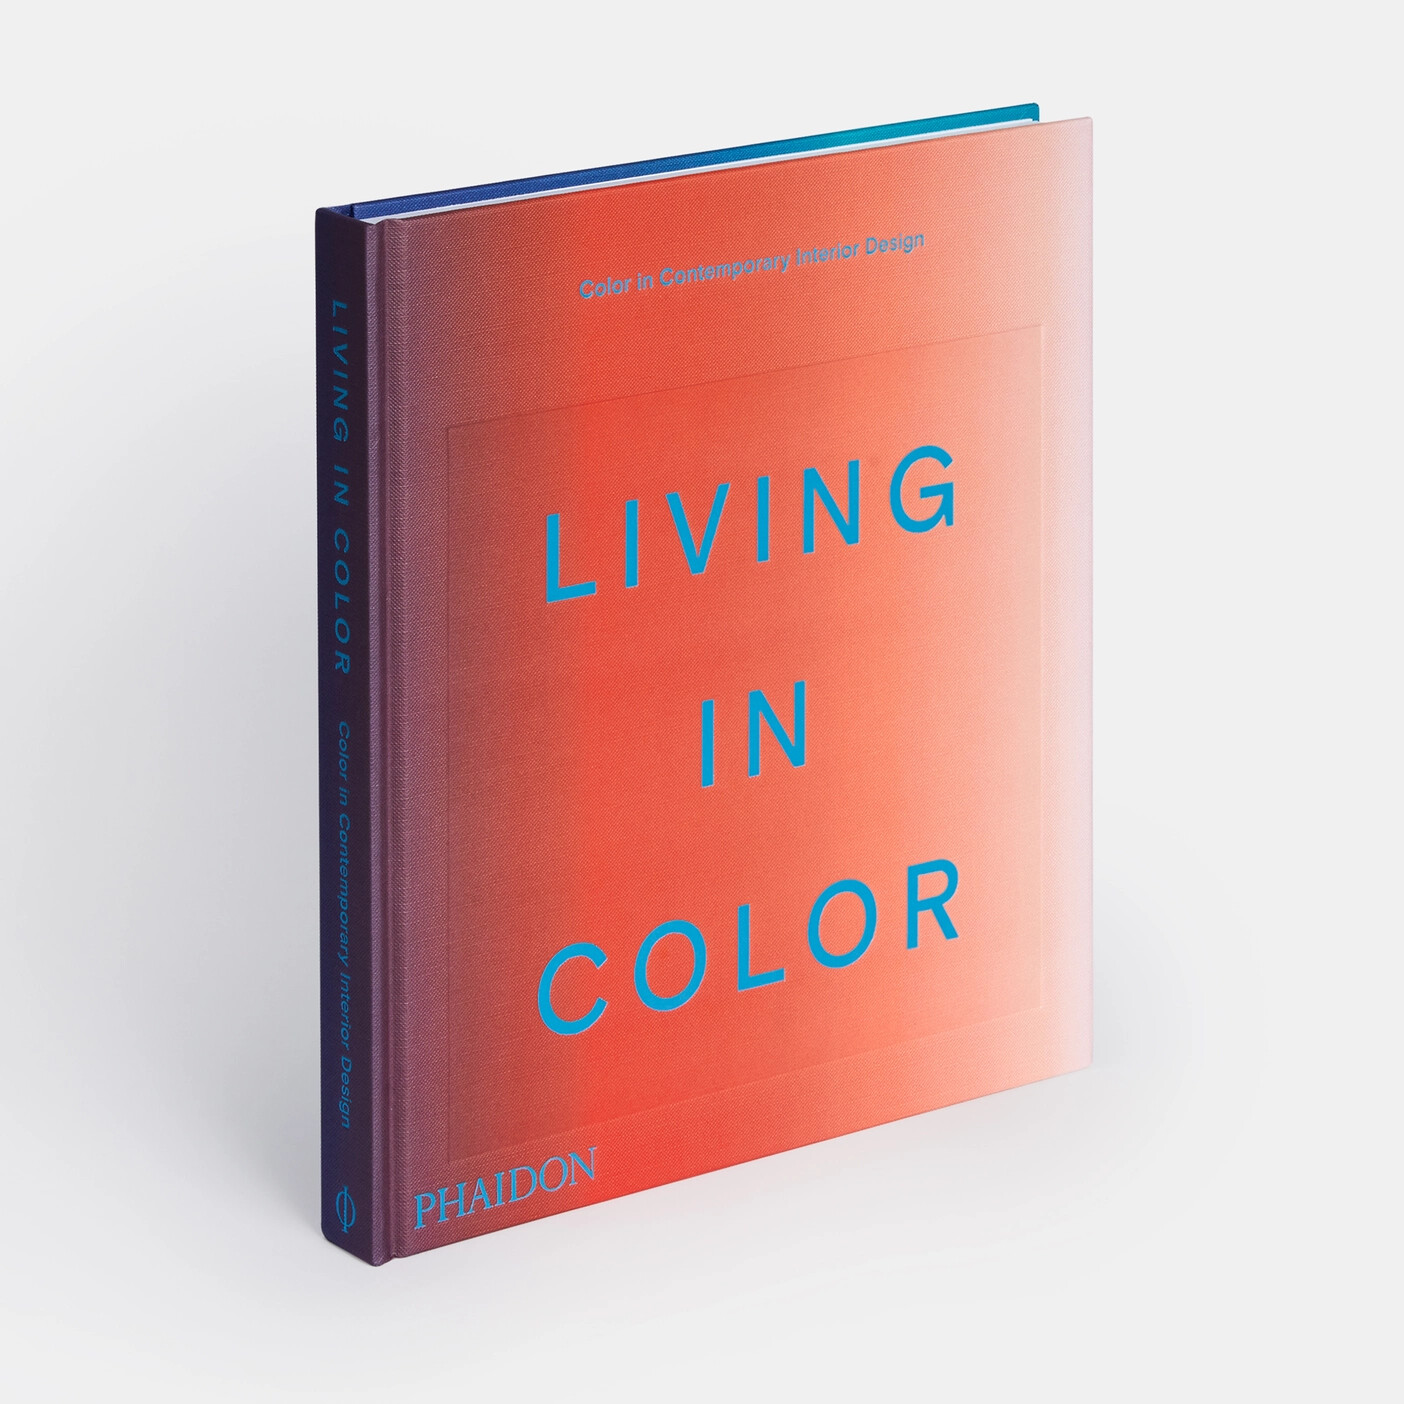 Phaidon - Living in Color: Color in Contemporary Interior Design Phaidon Editors, with texts by color historian Stella Paul and interior designer India Mahdavi